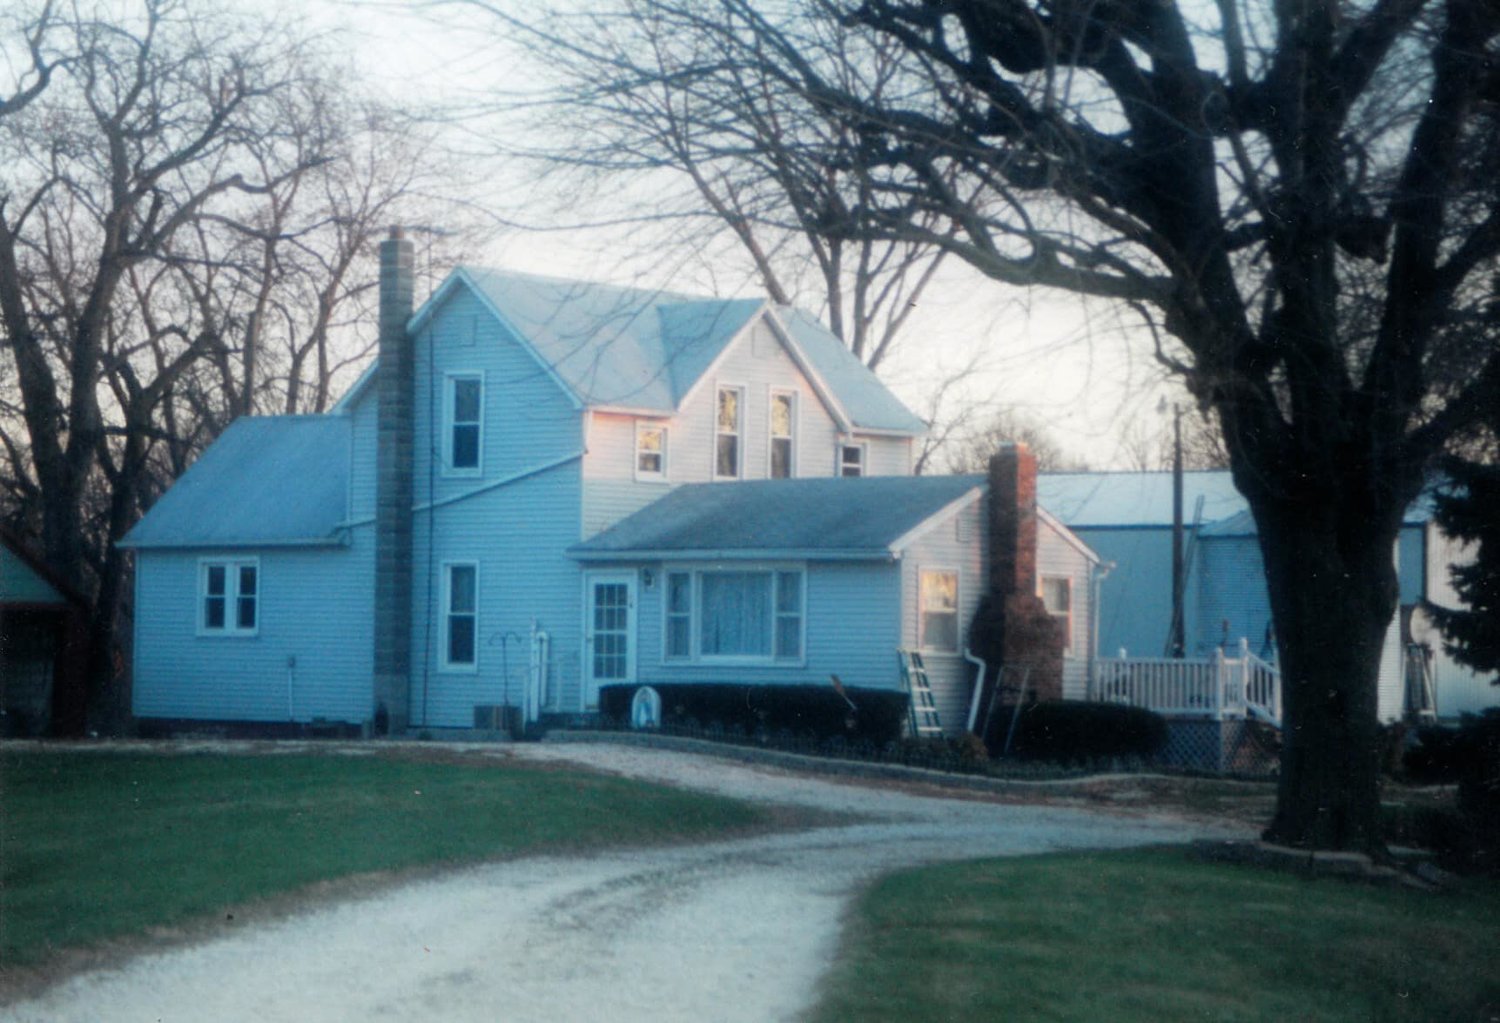 This farmhouse was the home of Liz Schleicher’s ancestors in Calhoun County, Illinois.